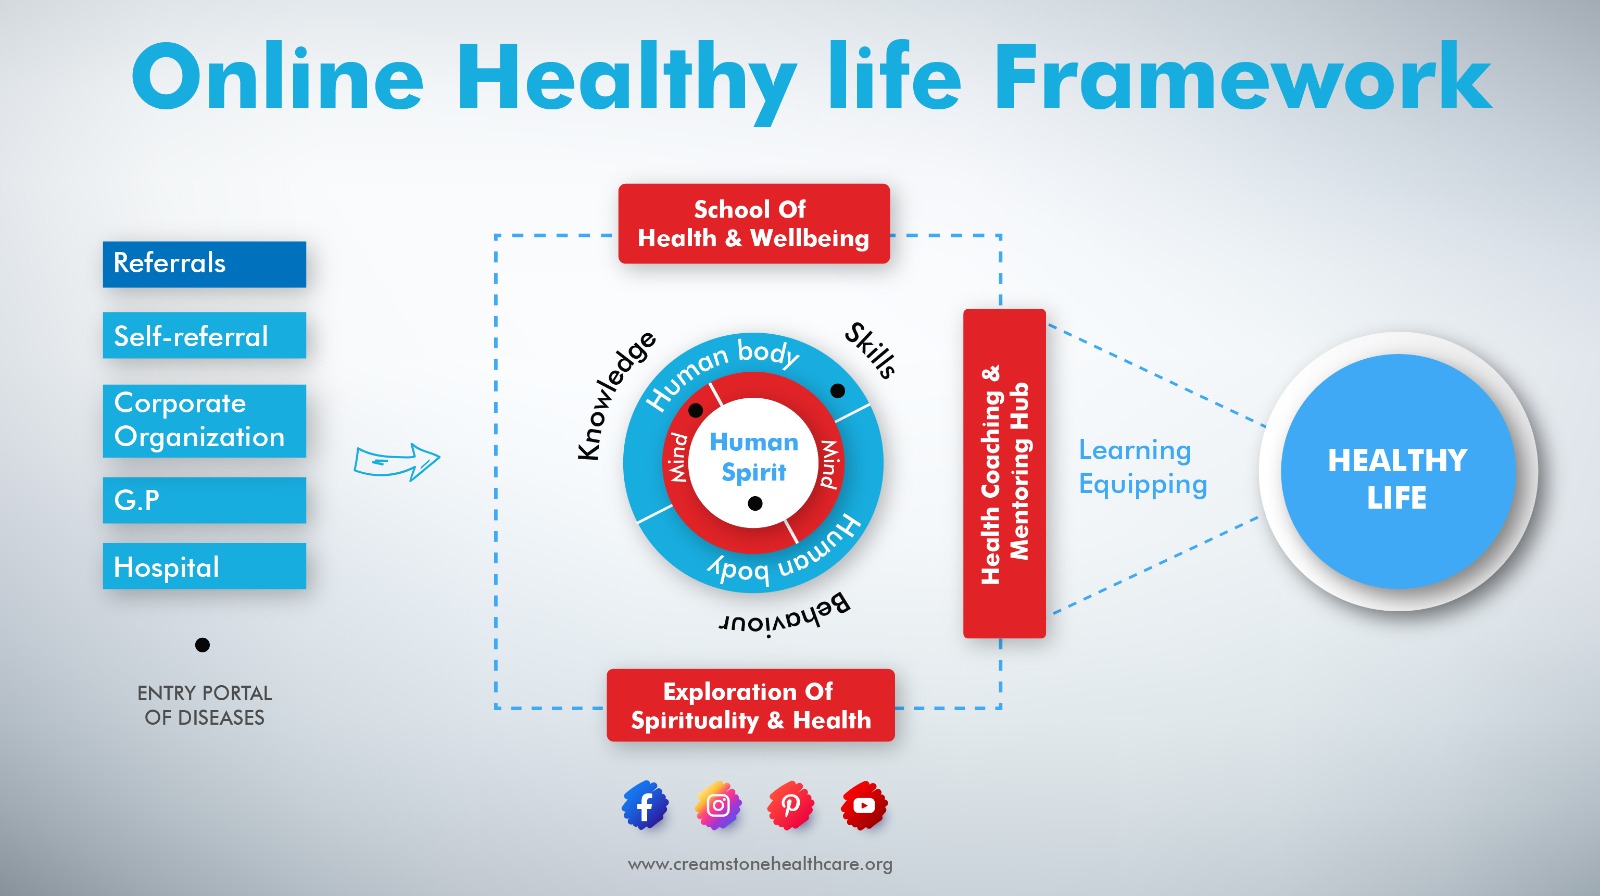 Online Healthy Life Framework